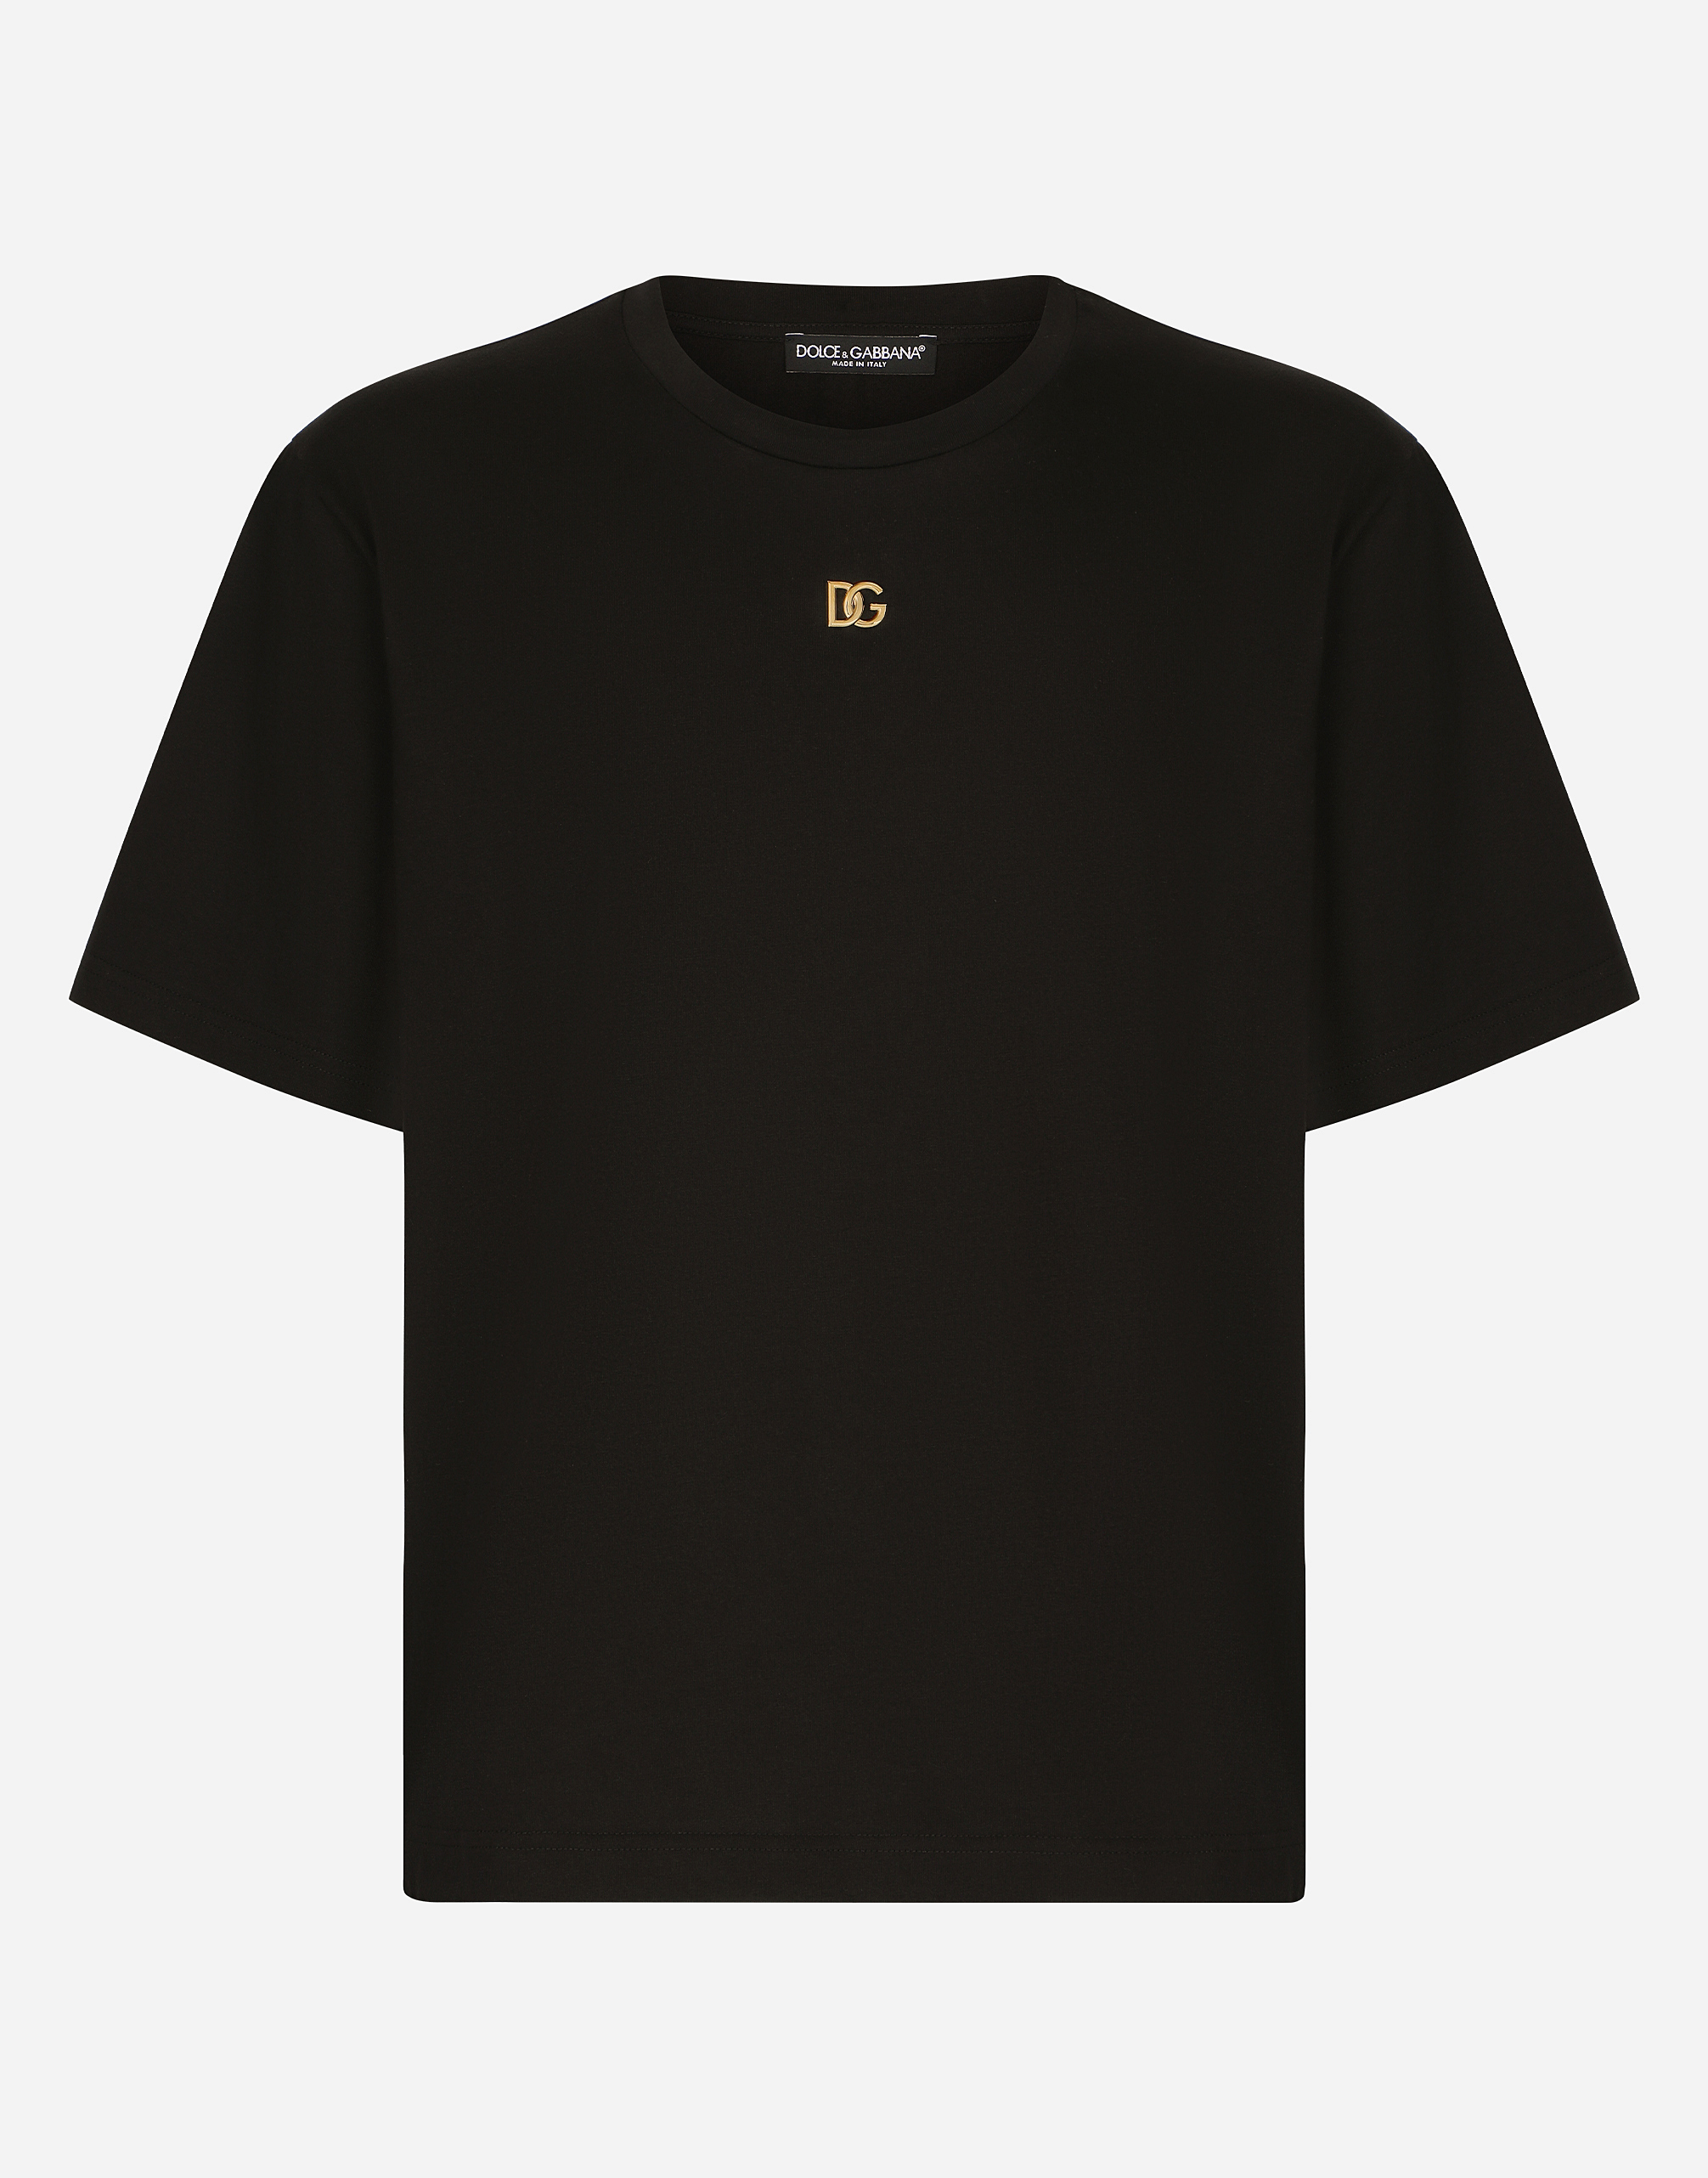 Cotton T-shirt with metallic DG logo in Black